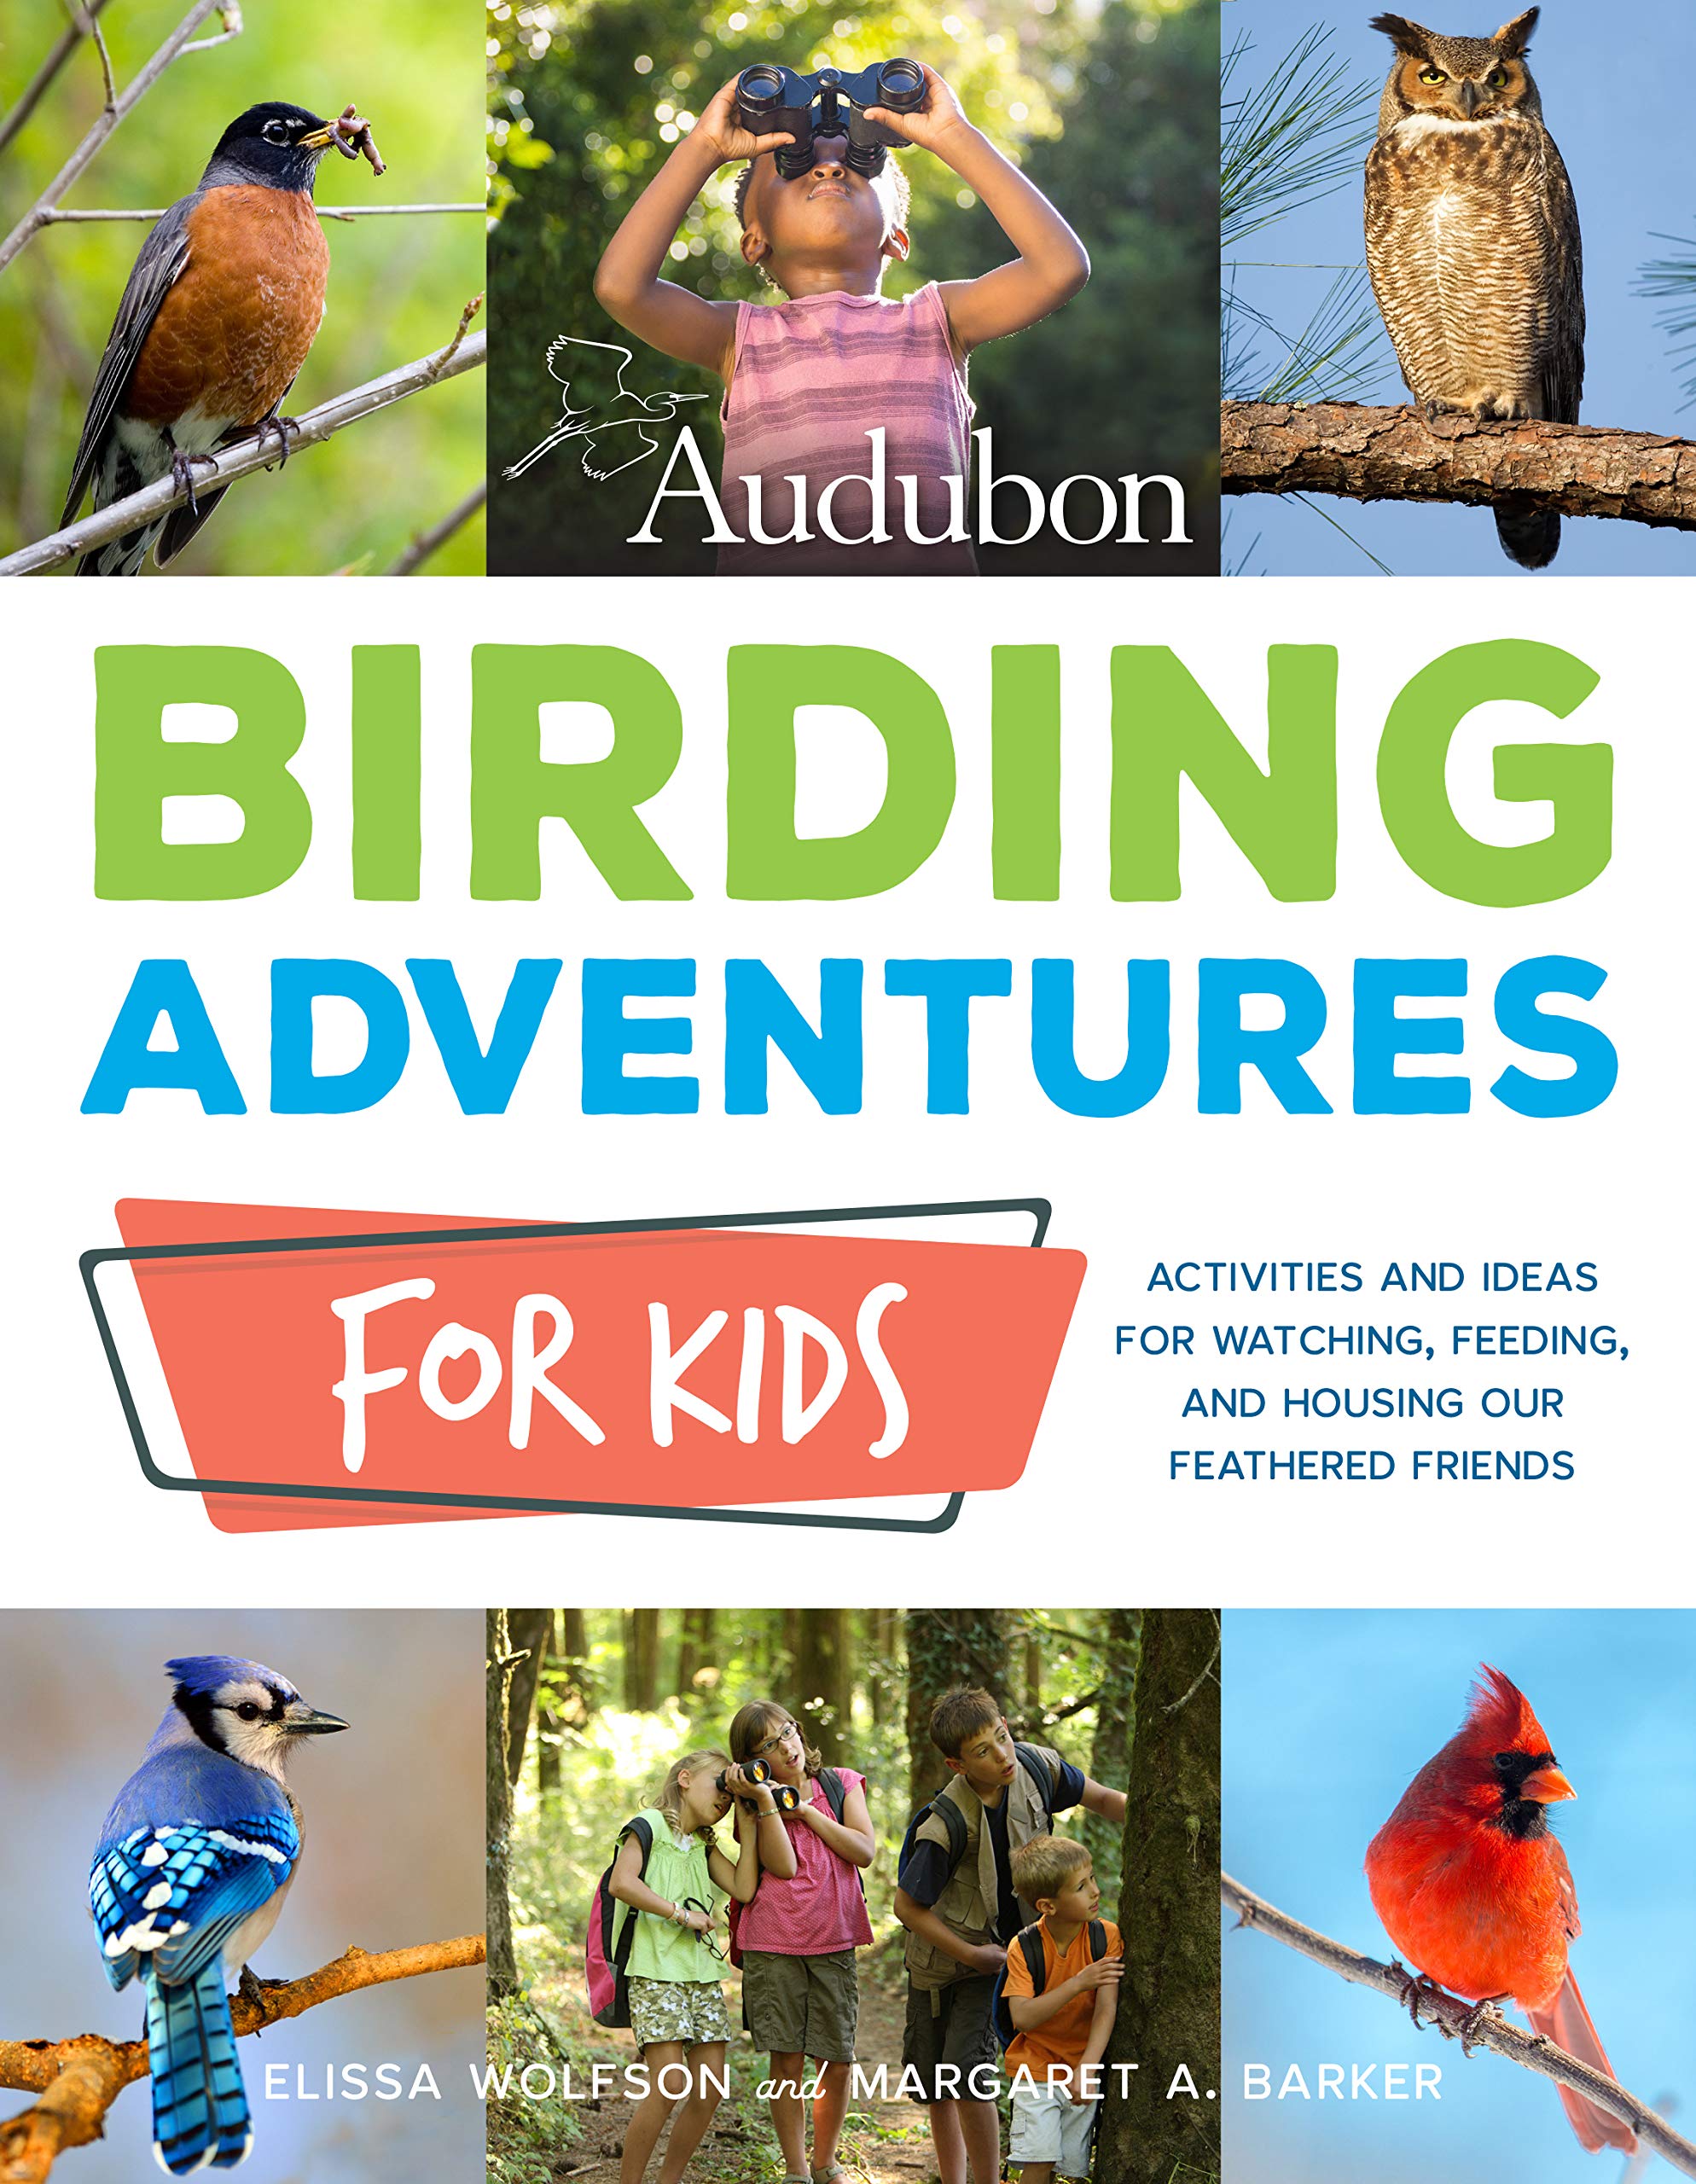 birding adventures for kids book cover